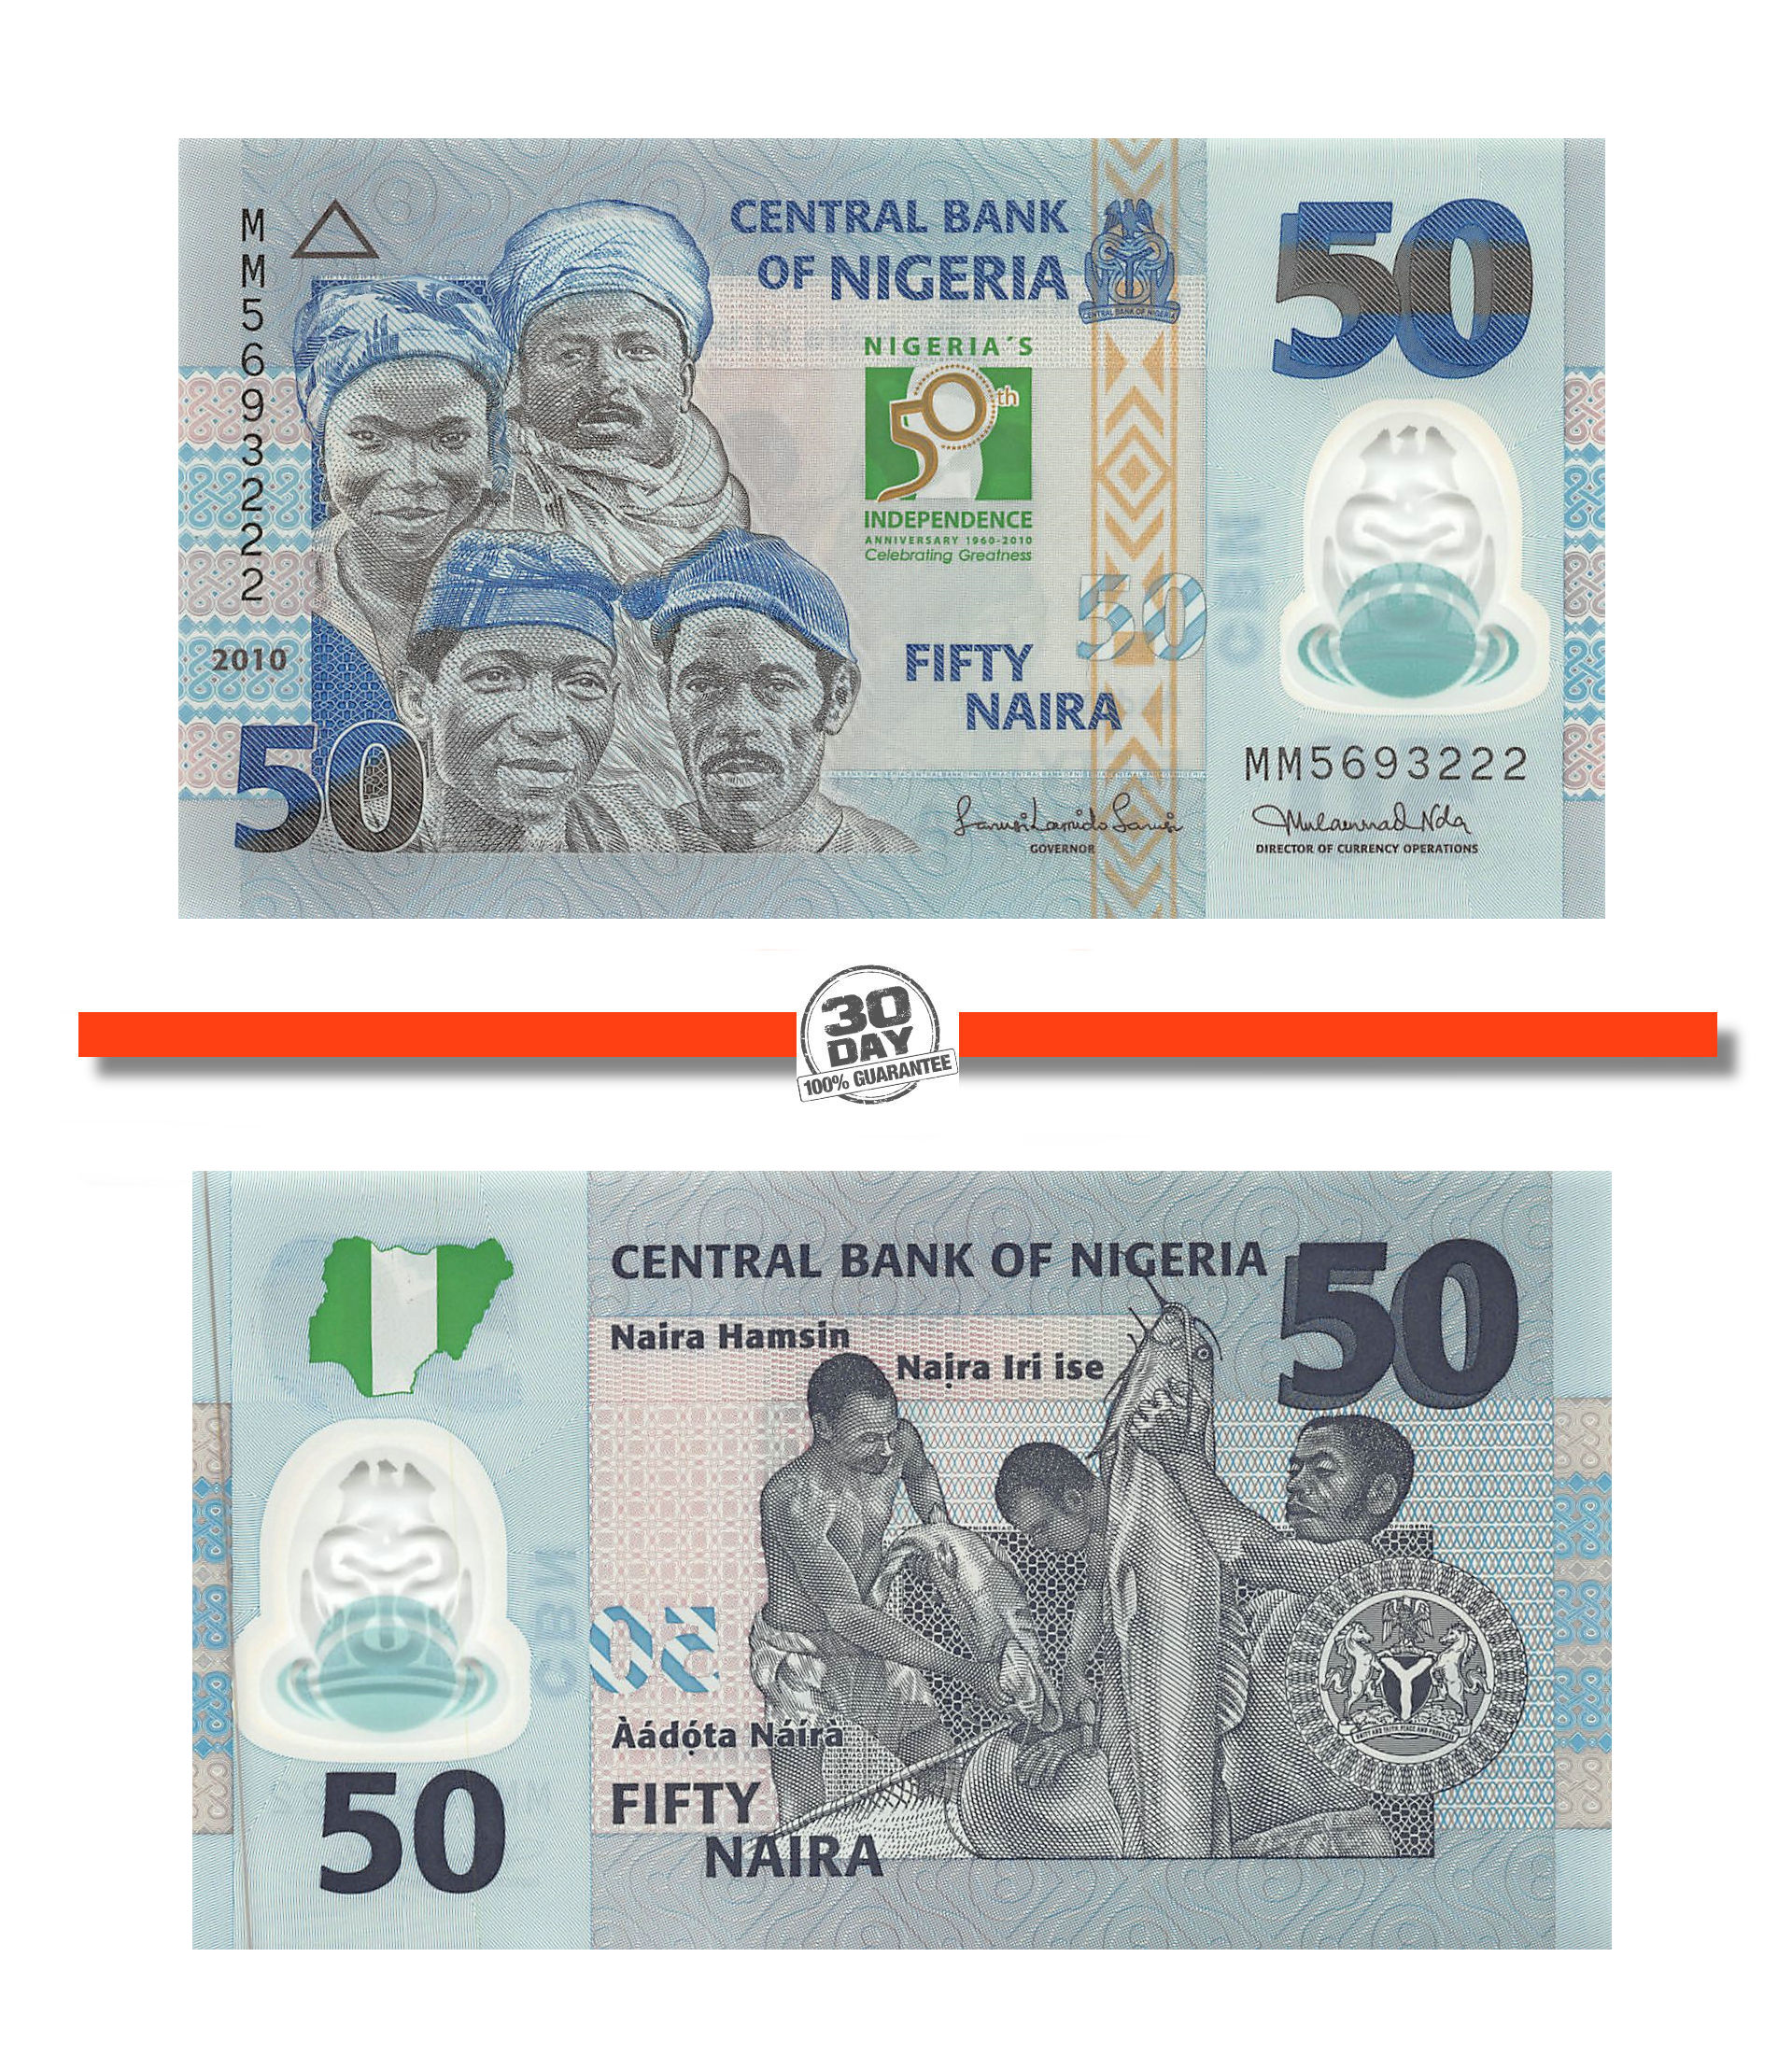 Nigeria 50 Naira 2010 Pick 37 UNC Uncirculated Banknote Polymer 